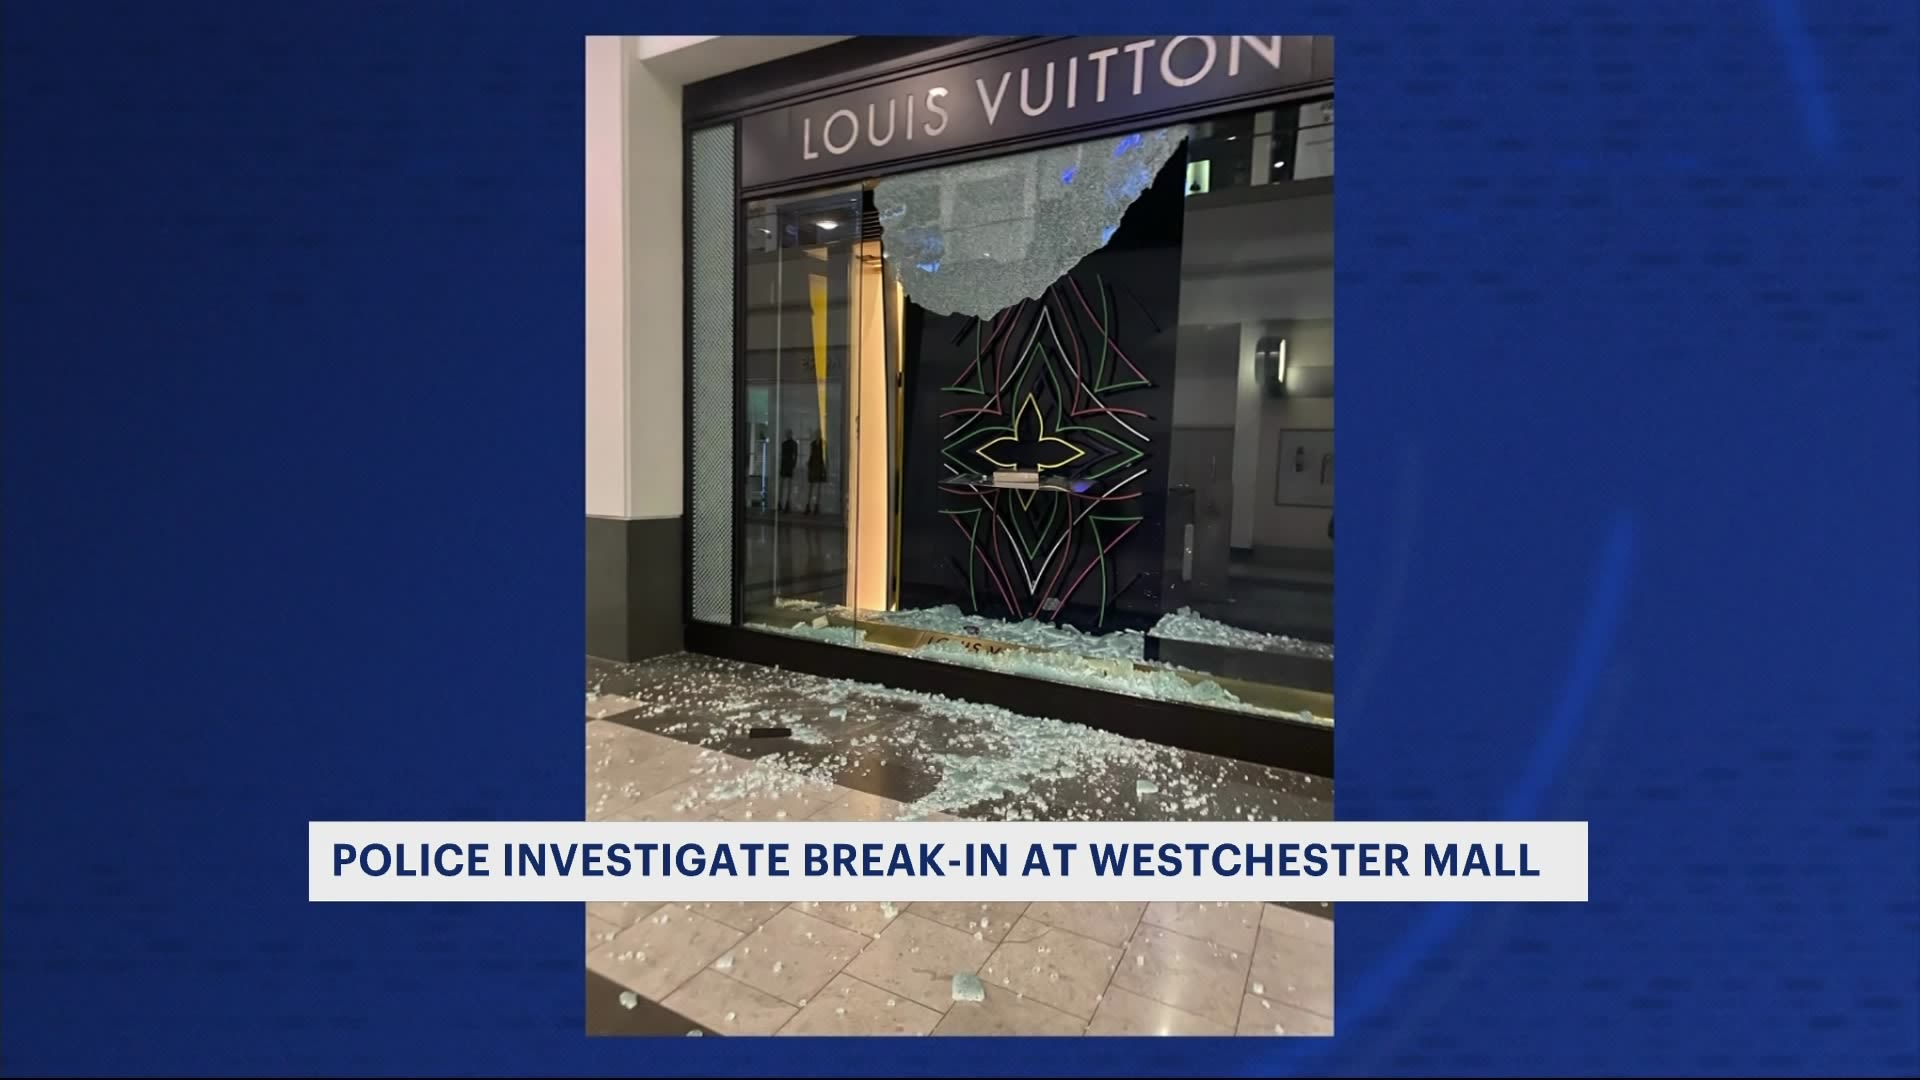 Louis Vuitton White Plains Westchester store, United States